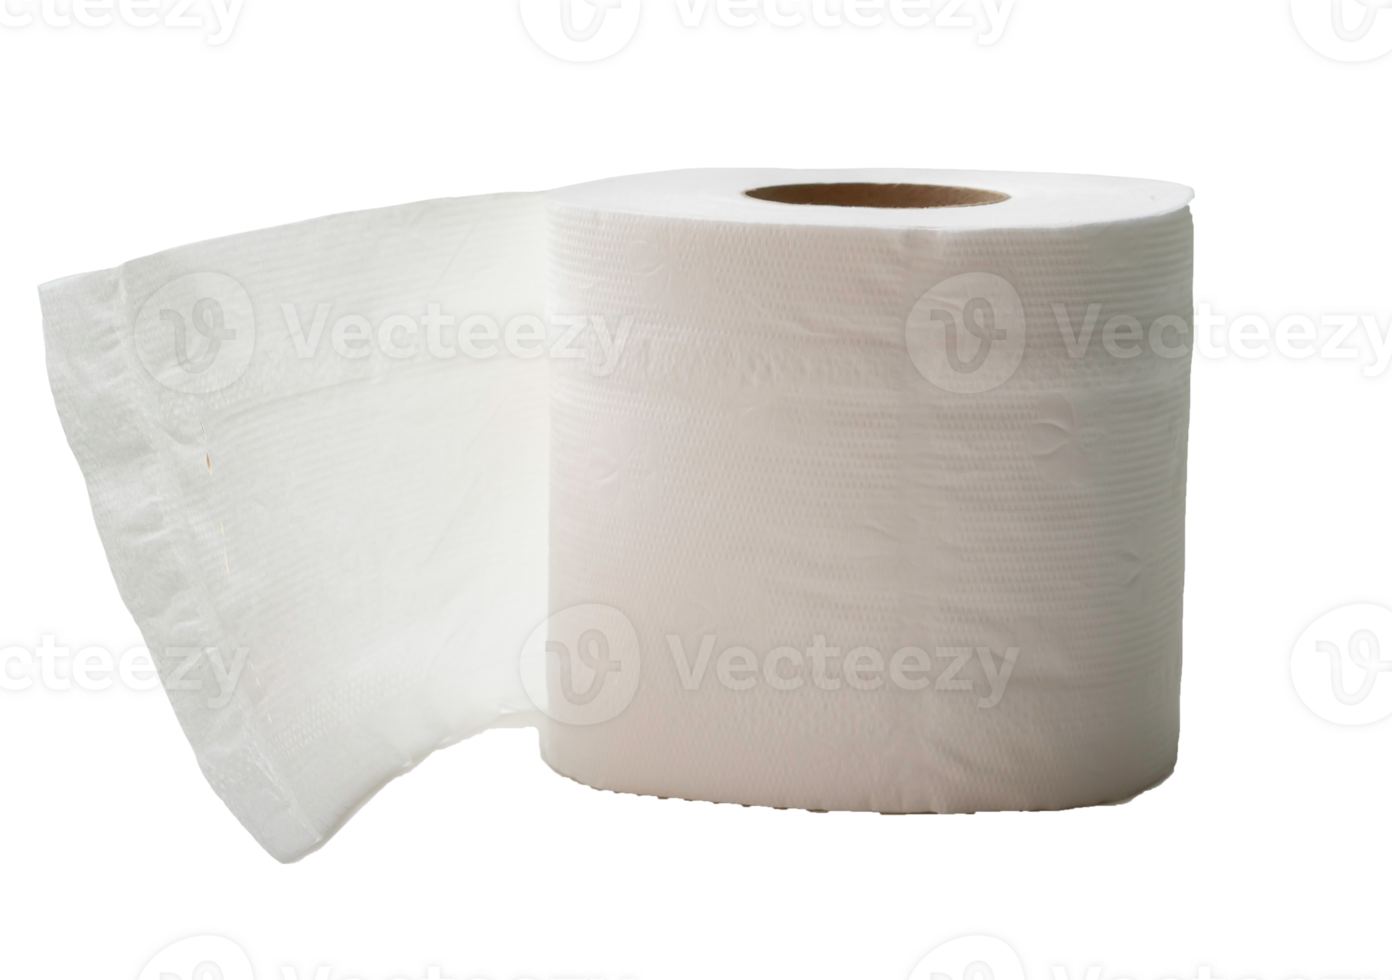 soltero rodar de blanco pañuelo de papel papel o servilleta preparado para utilizar en baño o Area de aseo aislado con recorte camino en png archivo formato.